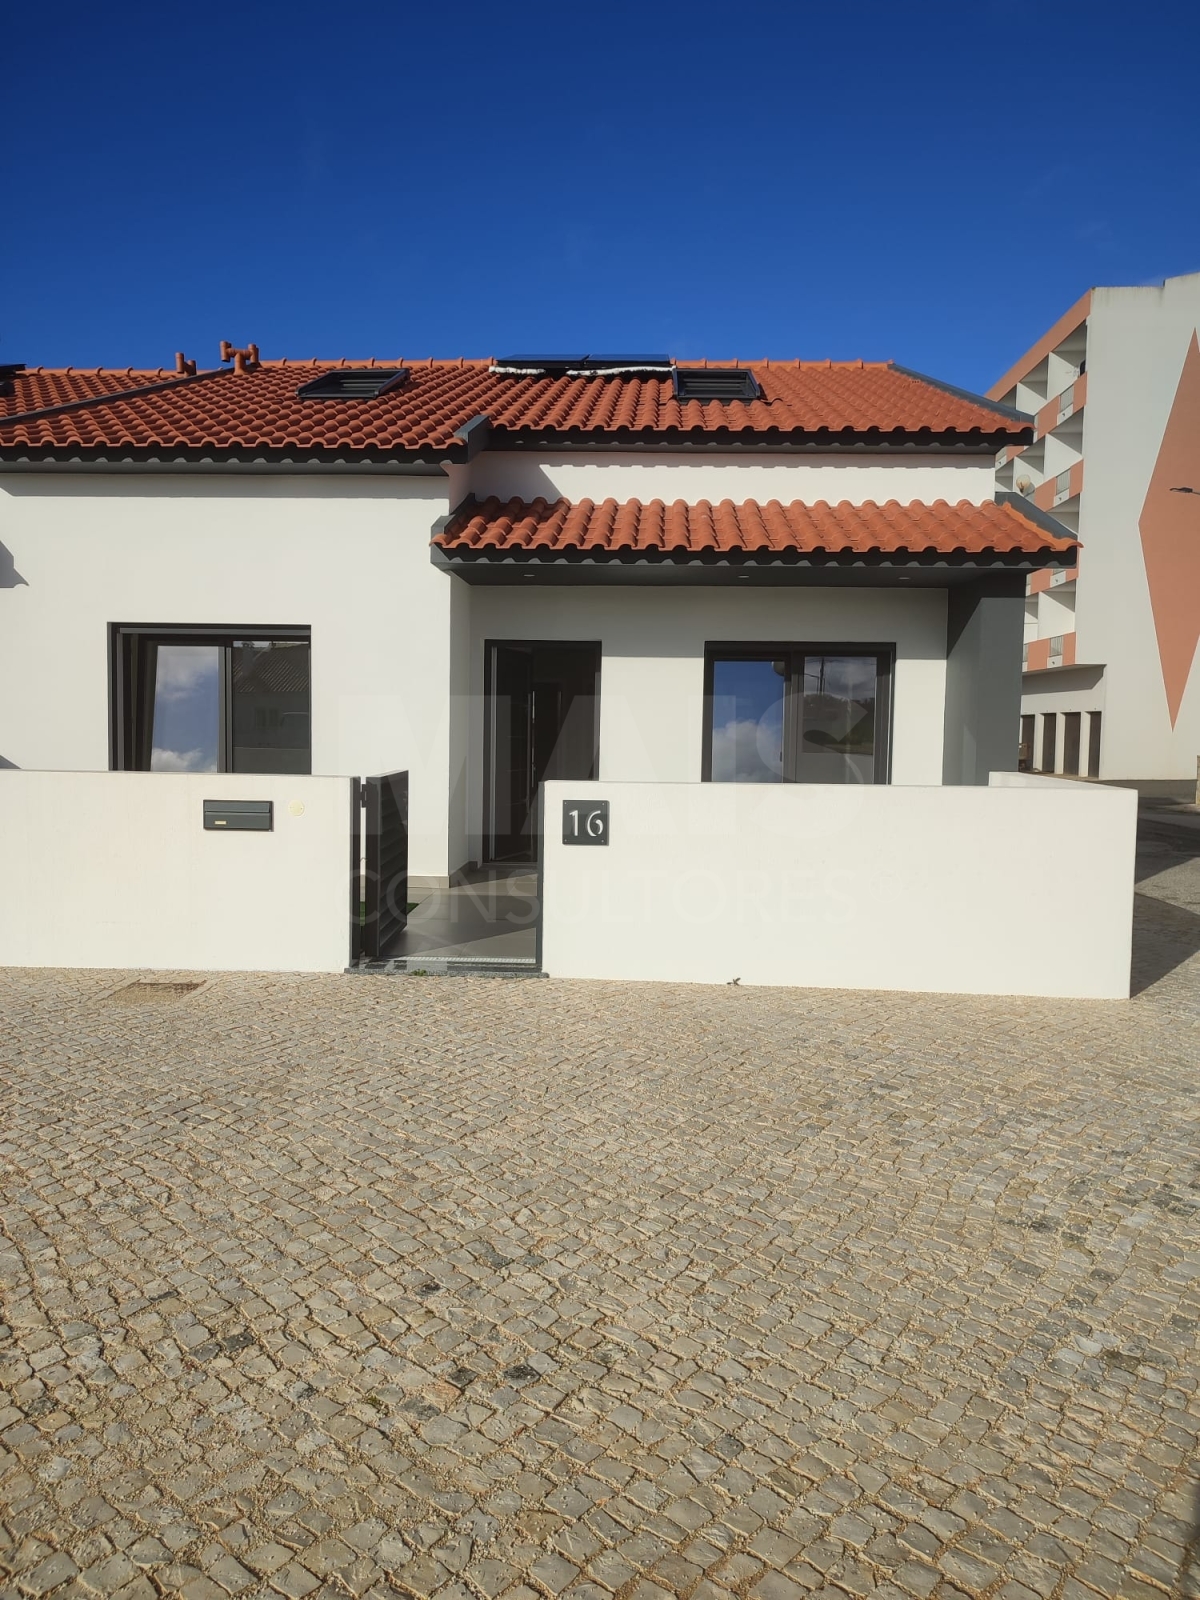 Semi-Detached House T2 +2 with use of attic 300metros from Praia da Formosa in the center of Santa Cruz